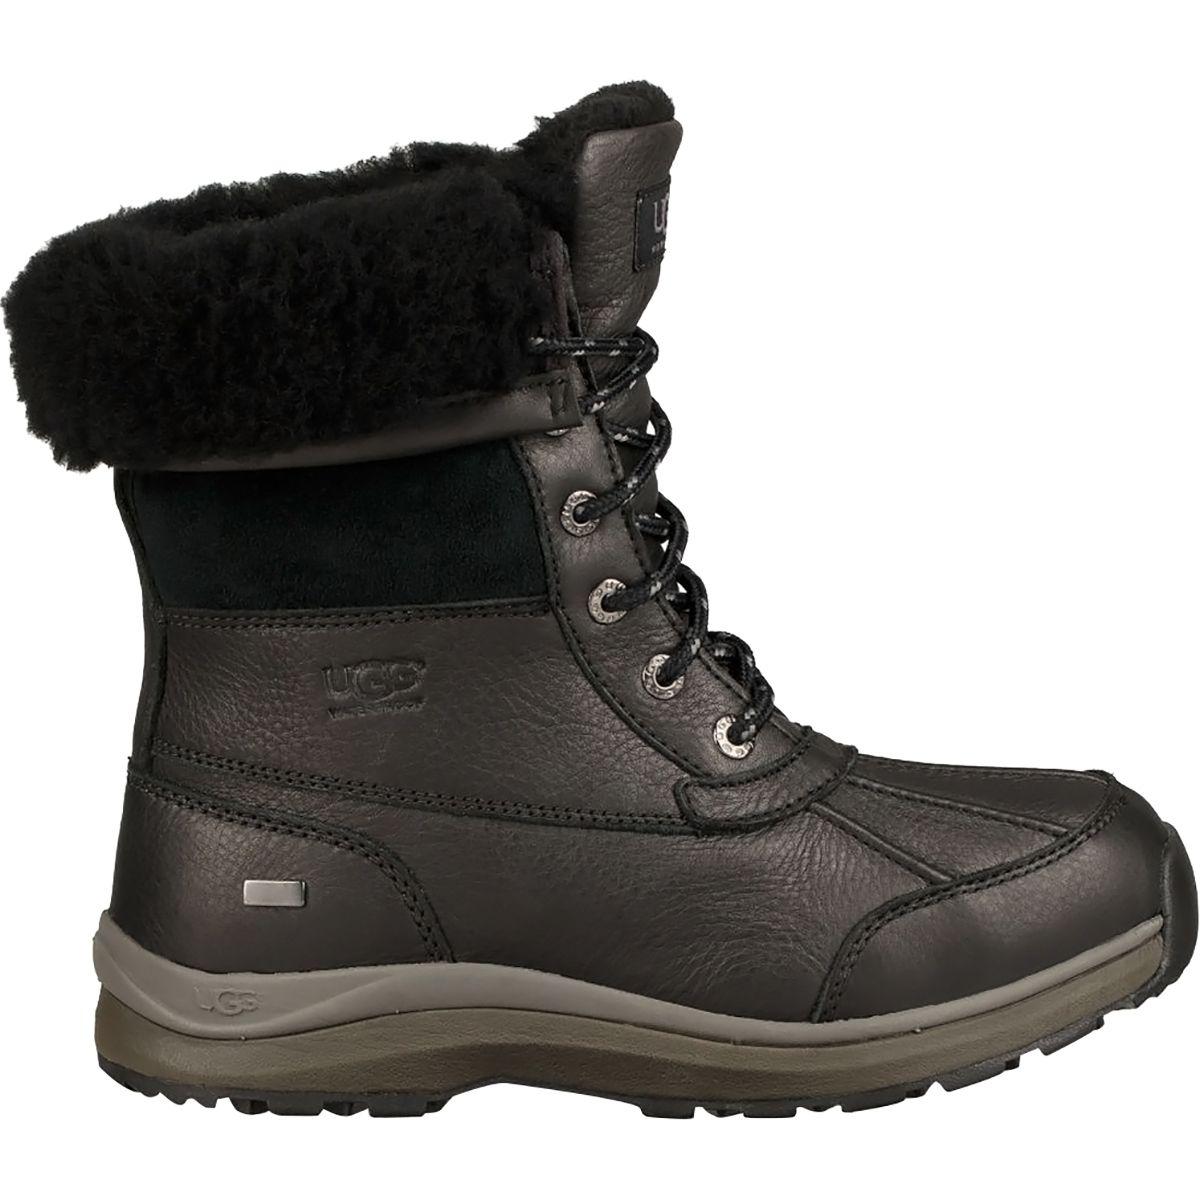 UGG Wool Adirondack Iii Boot in Black - Lyst